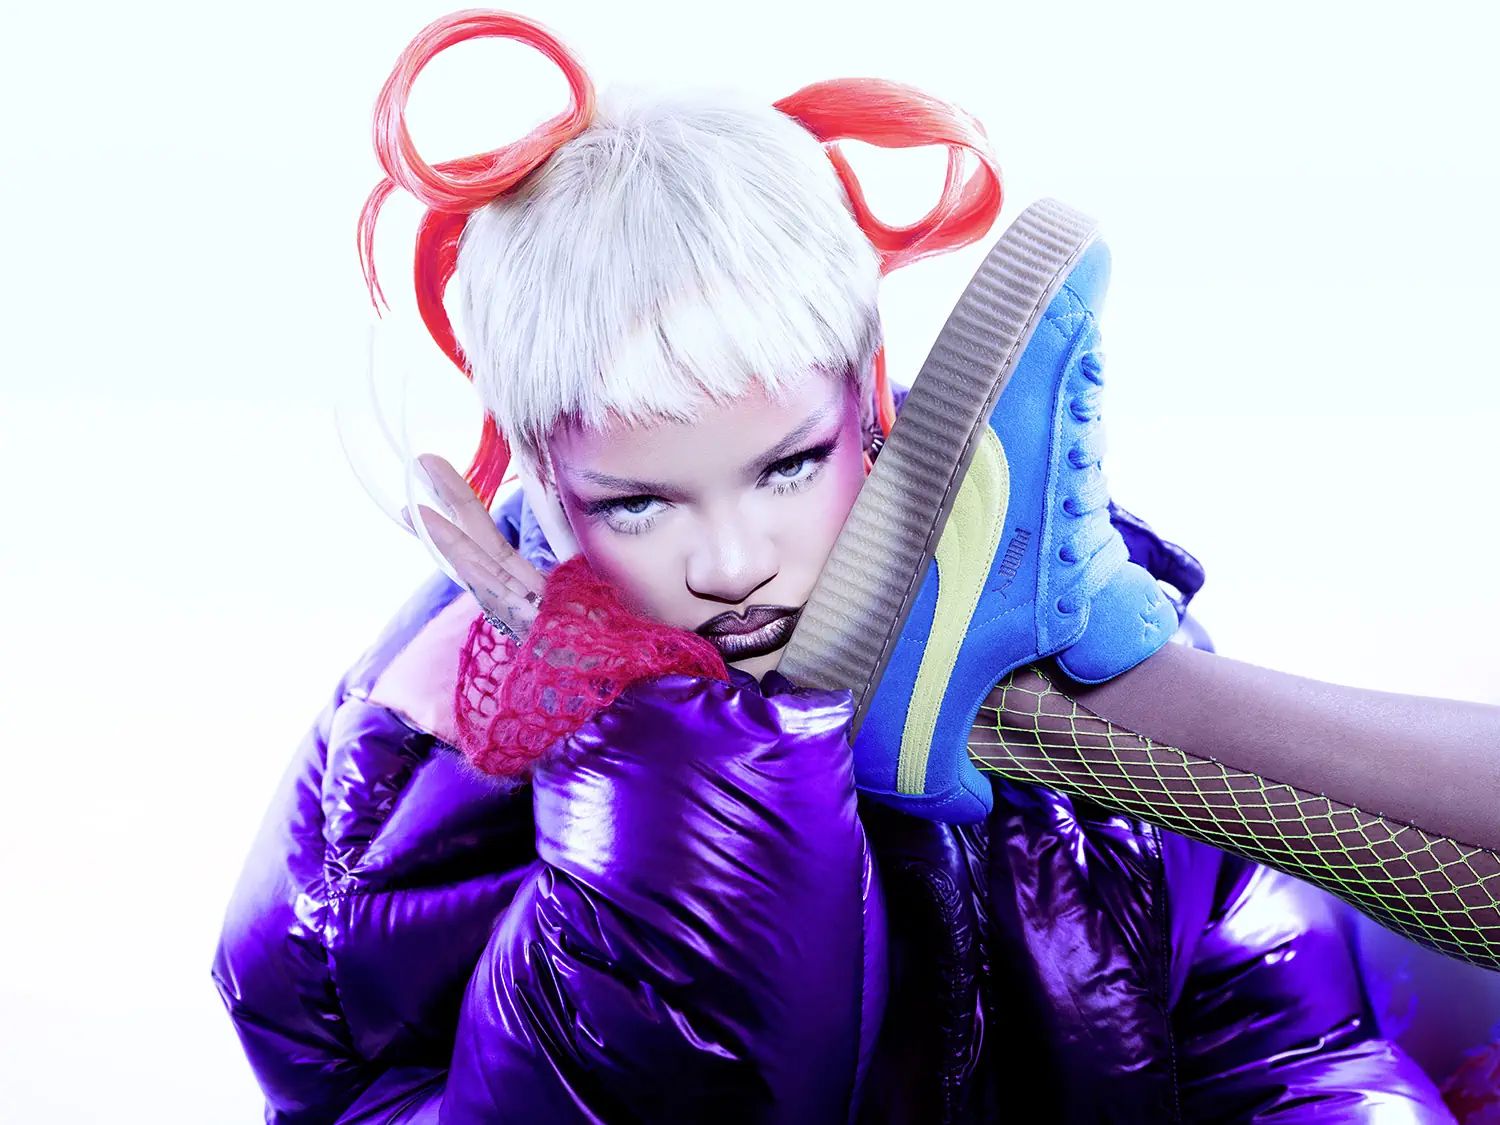 Rihanna's Fenty x Puma Creeper Phatty revives iconic style with bold flair